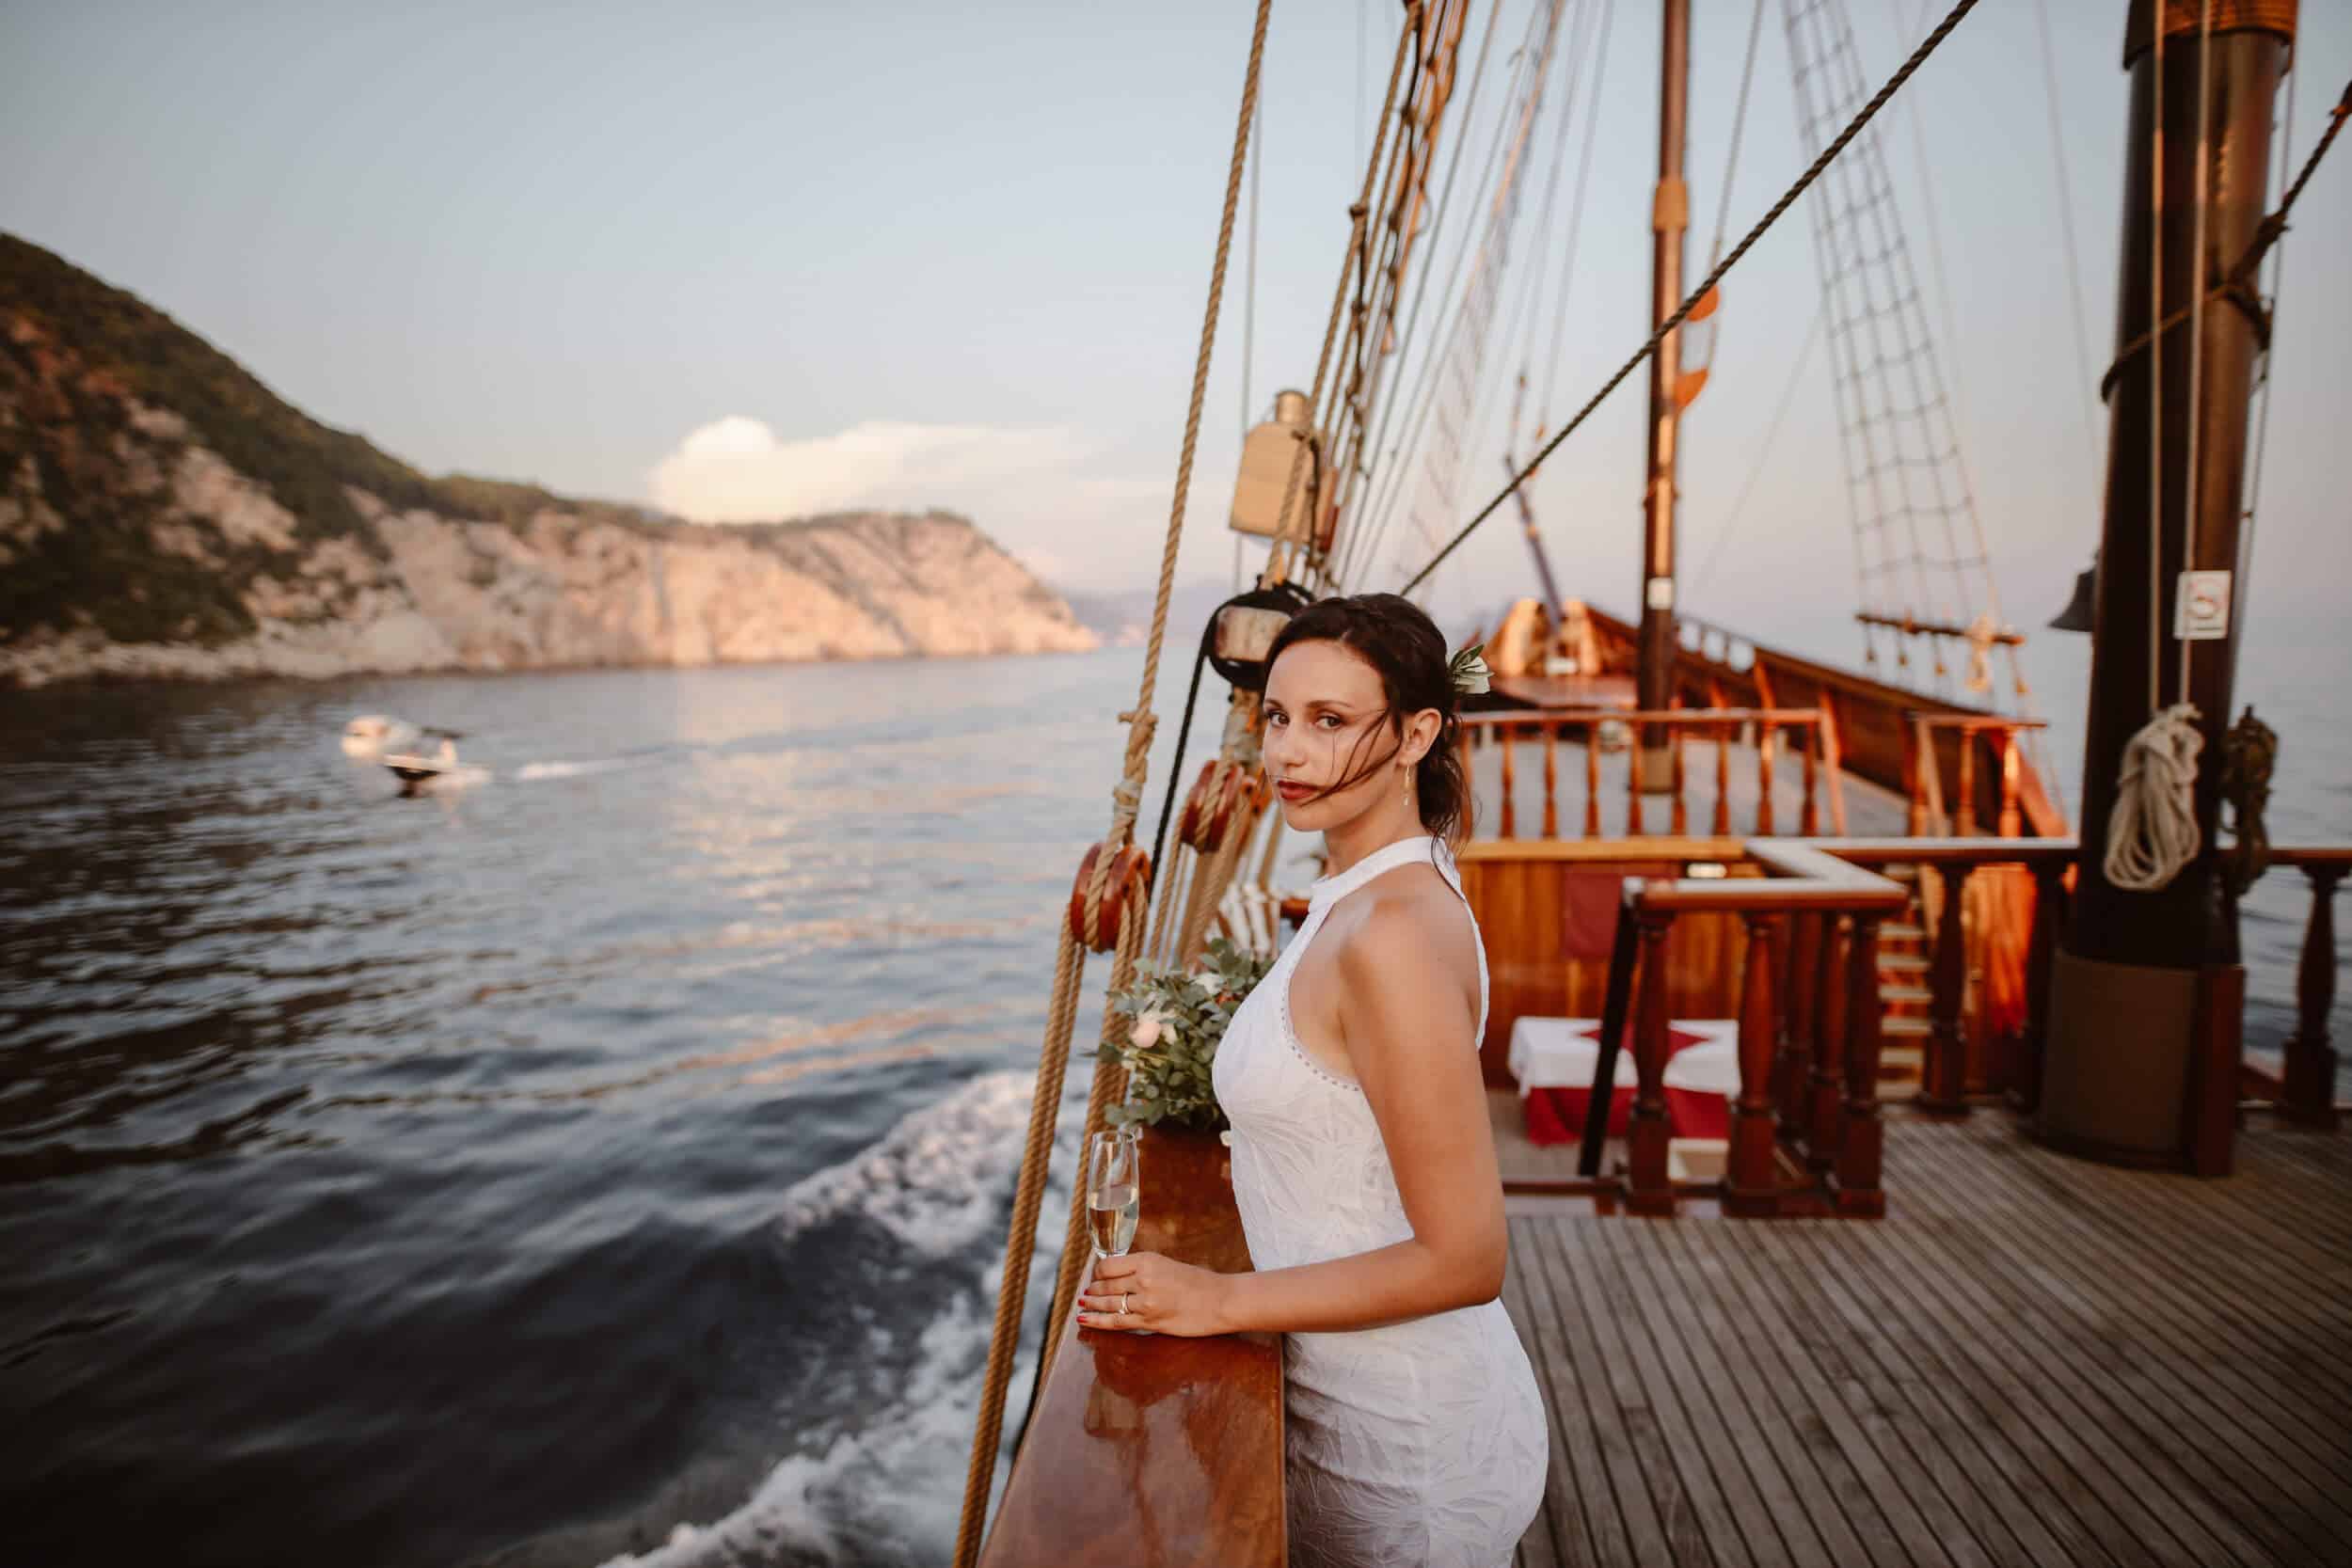 Dubrovnik karaka boat elopement matea stephan 12 | Croatia Elopement Photographer and Videographer